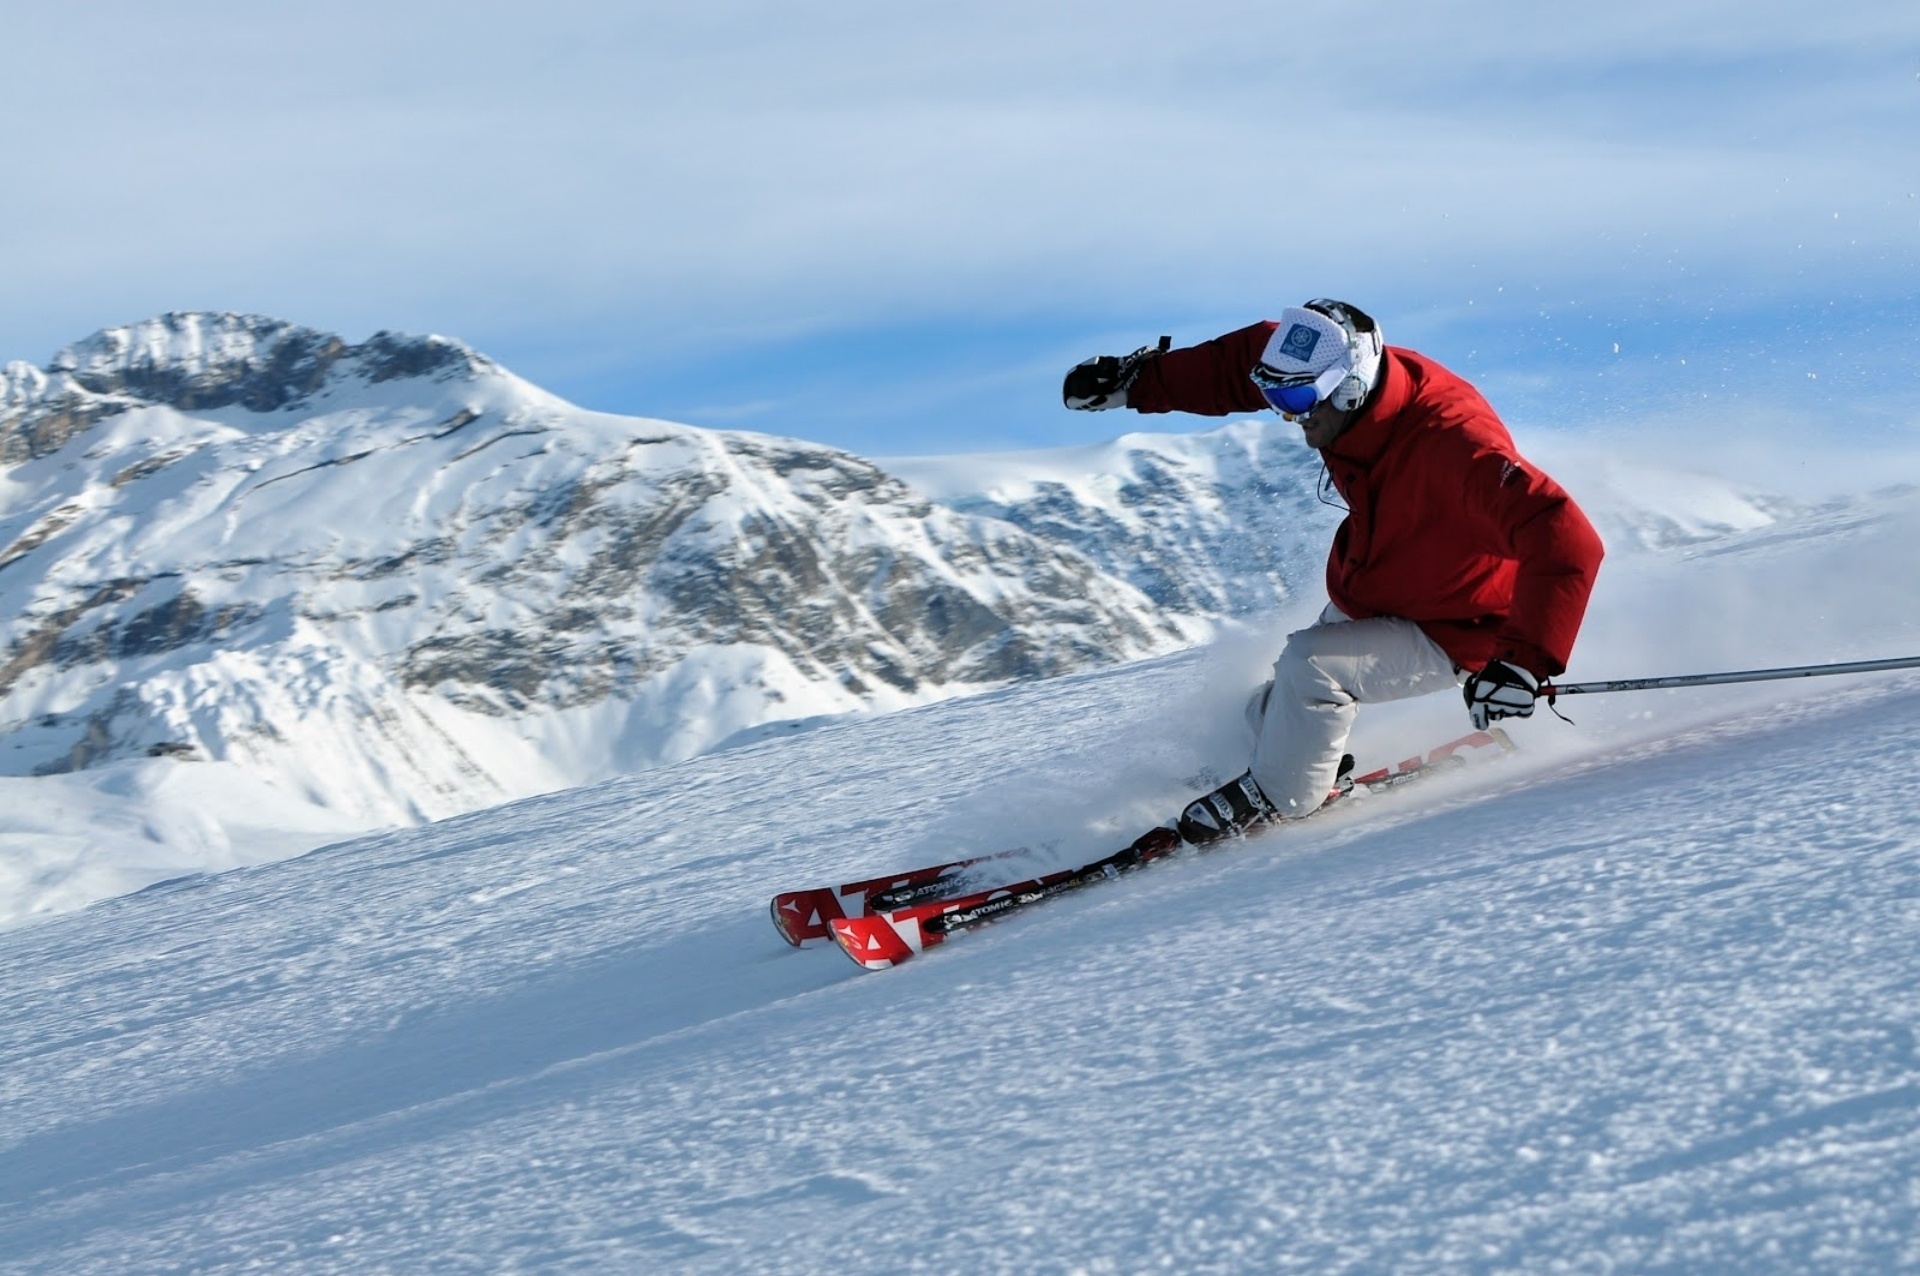 Alpine Skiing: Snow, Mountain, Skier, Sports equipment, Extreme sports, Winter, Freeride, Telemark skiing, Downhill. 1920x1280 HD Wallpaper.